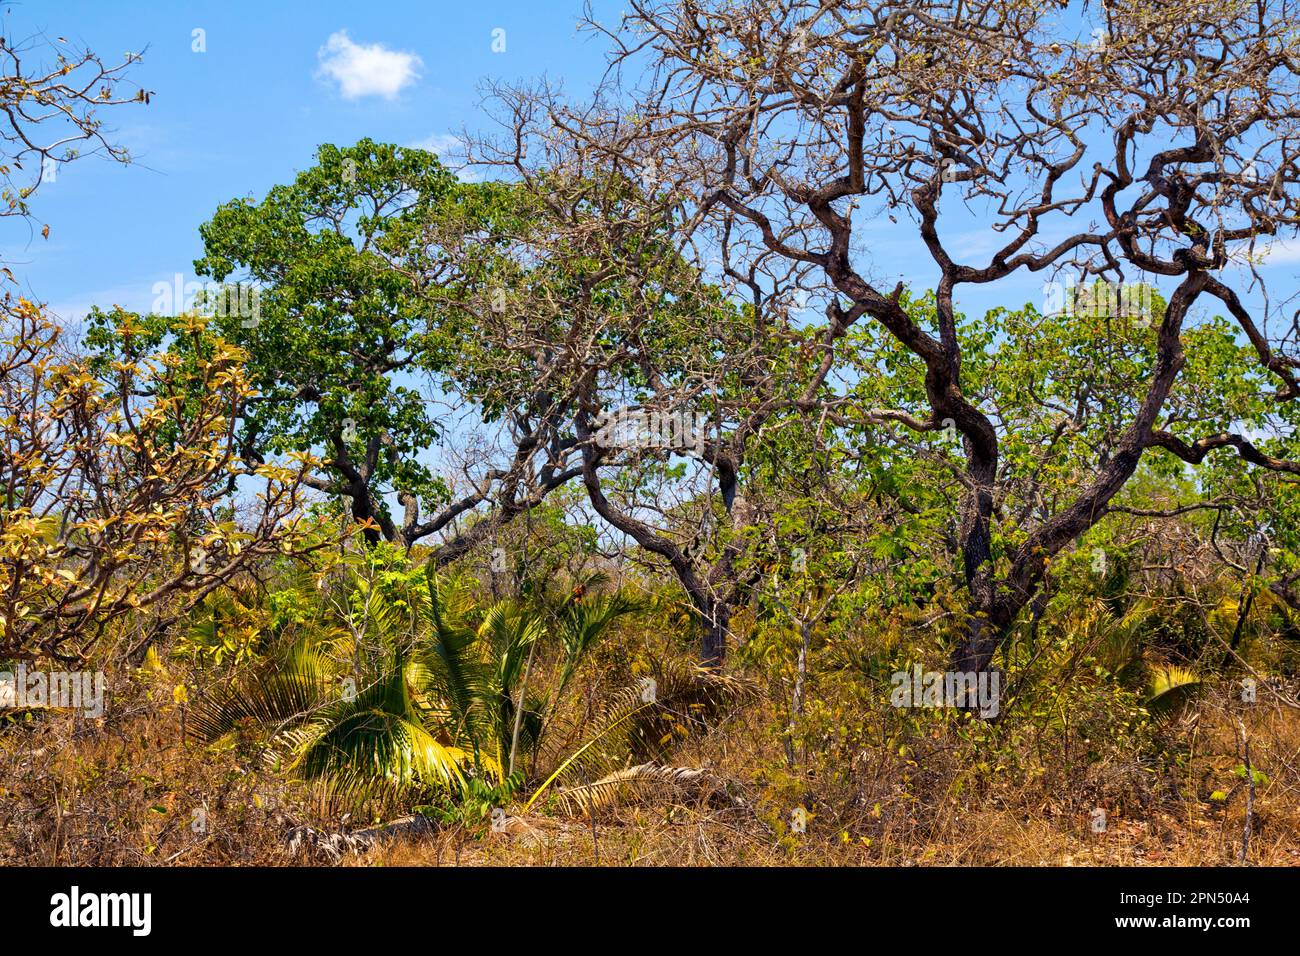 Cerrado (Brazilian savanna) with contorted trees, end of dry season. Grande Sertão Veredas Nat. Park, Brazil. Stemless palm is Attalea geraensis. The cerrado is-a biodiversity hotspot. Stock Photo